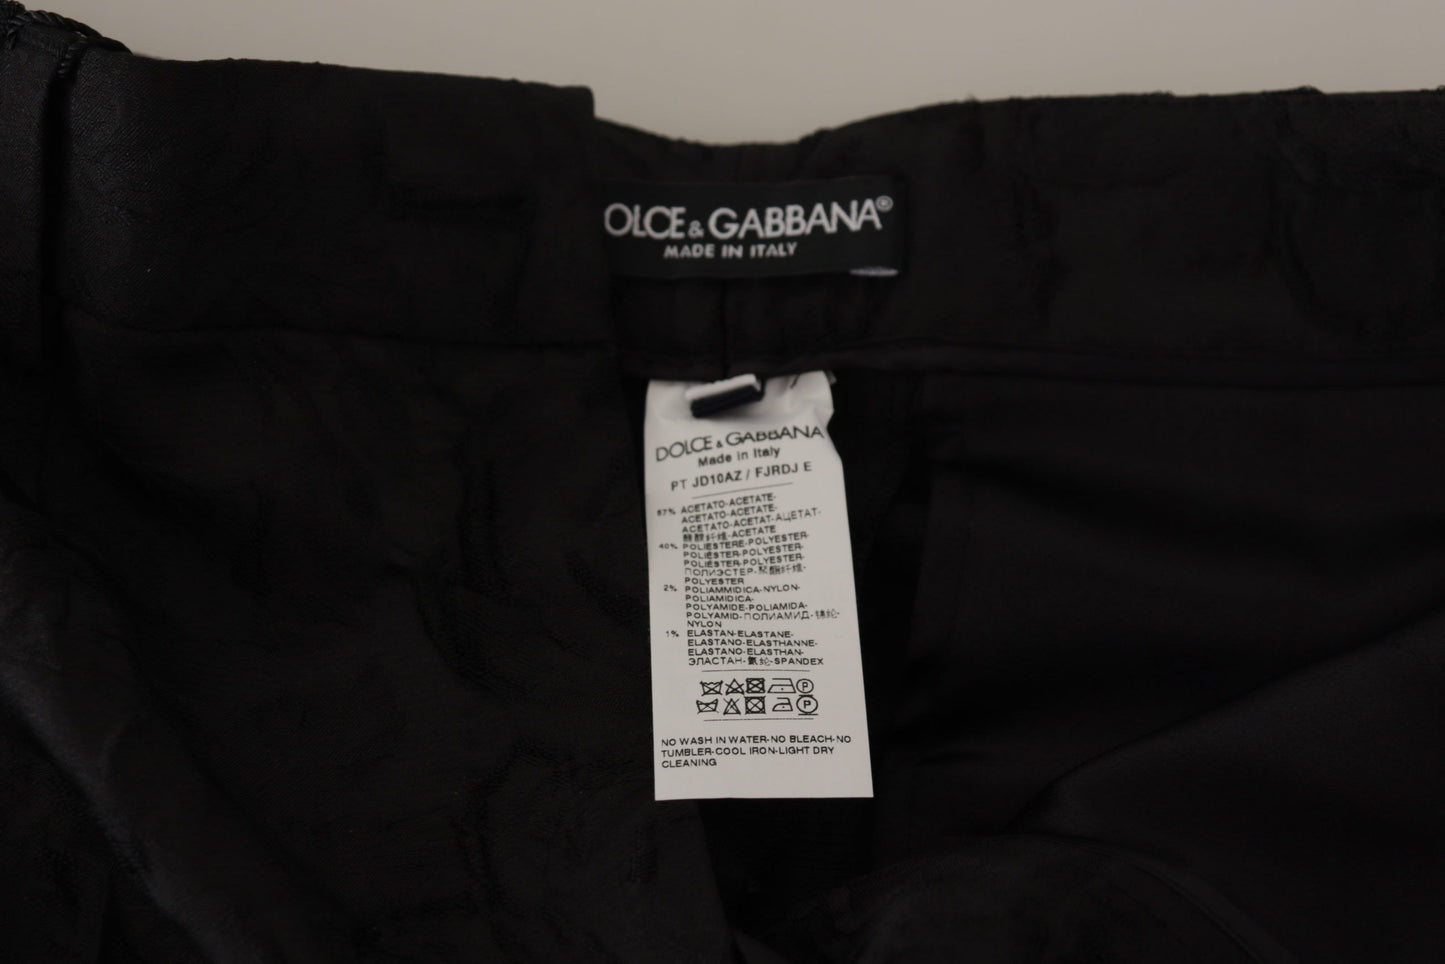 Dolce & Gabbana Black Brocade Cropped High Waist Pants